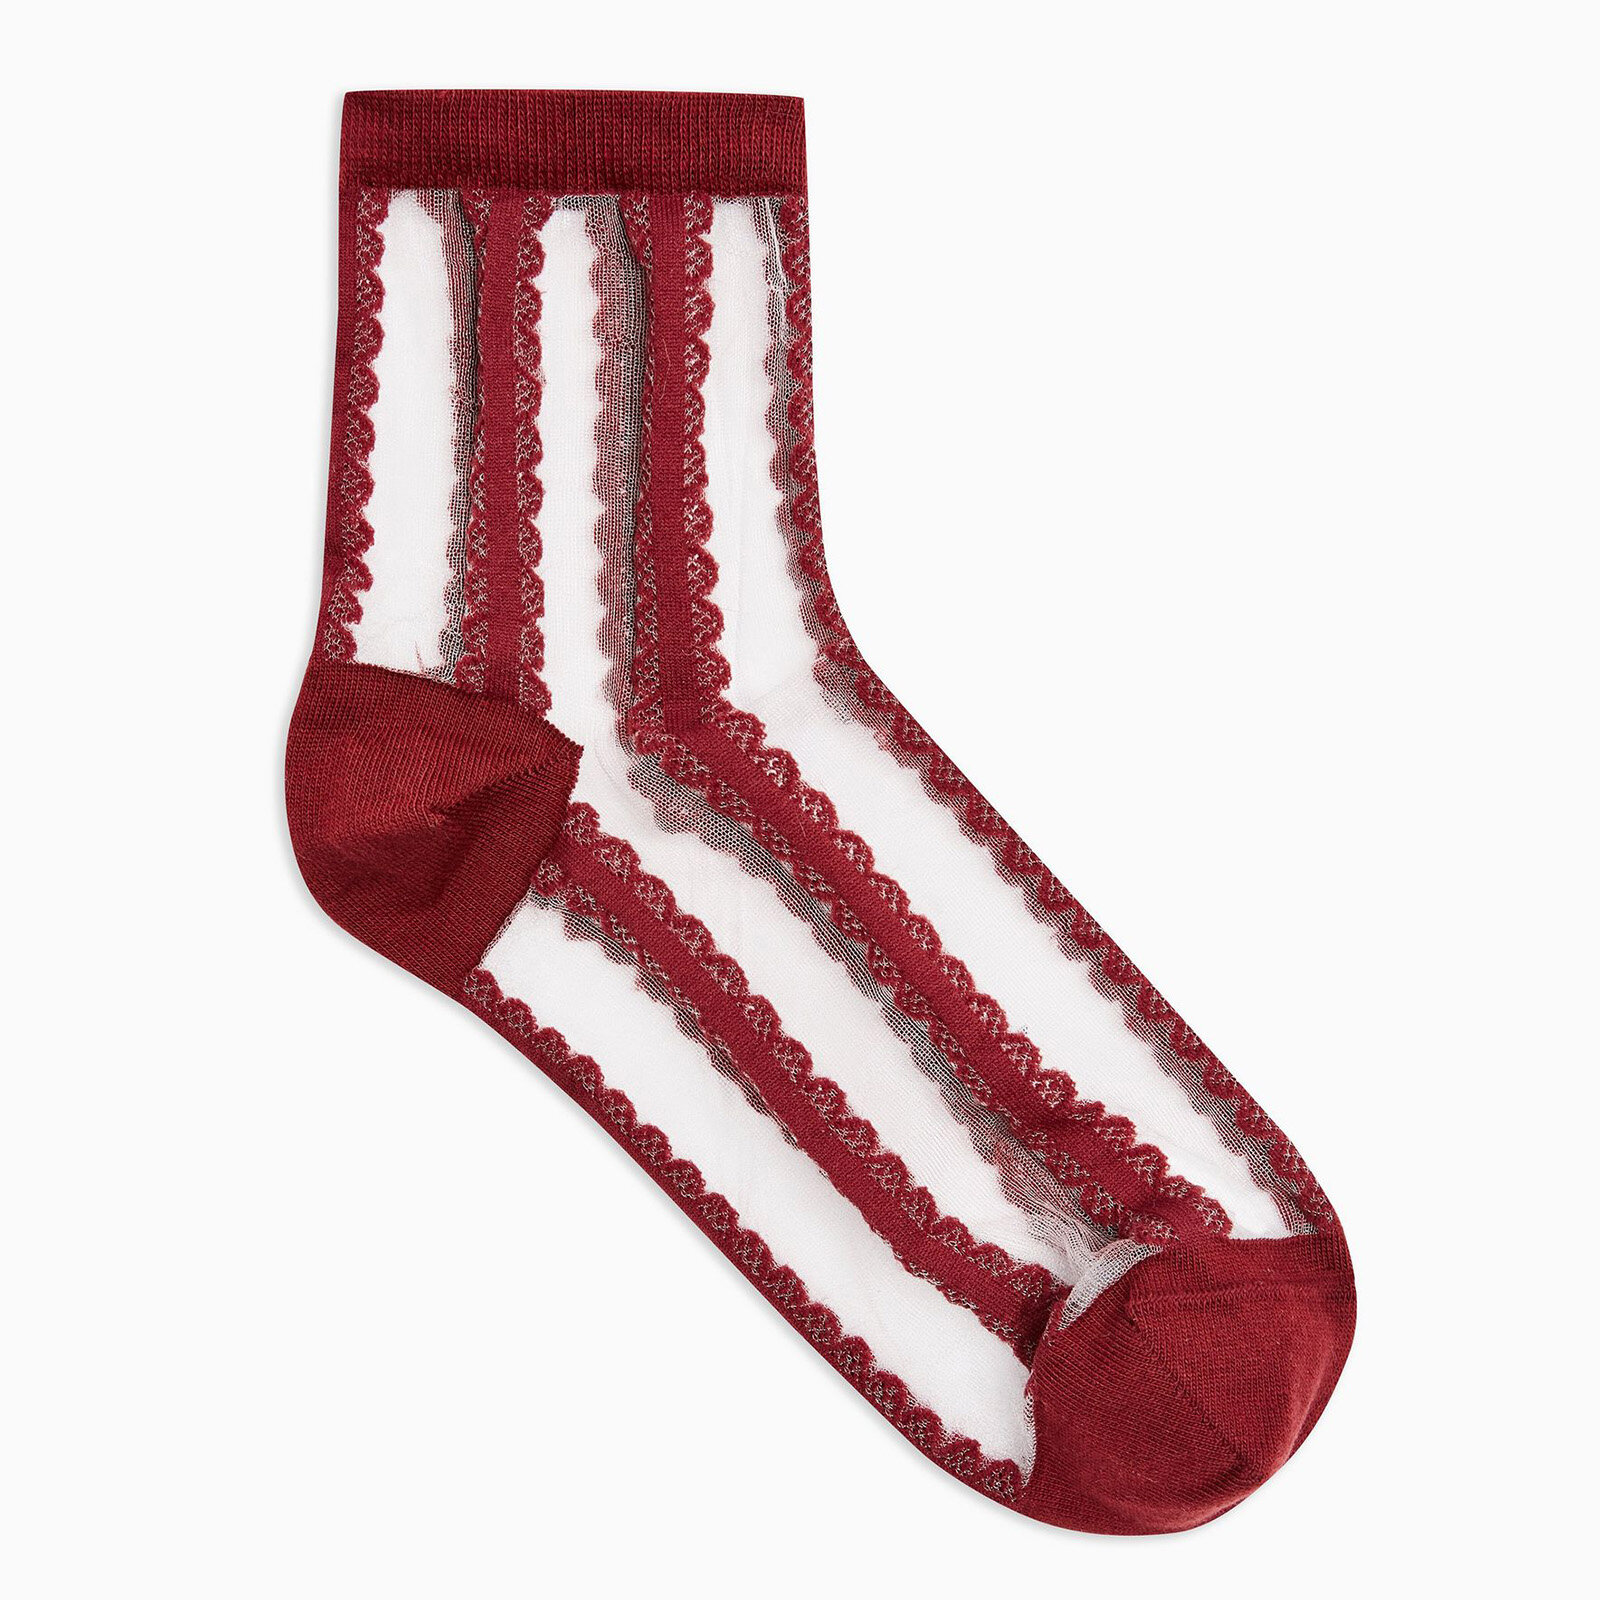 Burgundy Scallop Mesh Socks, Topshop, $6